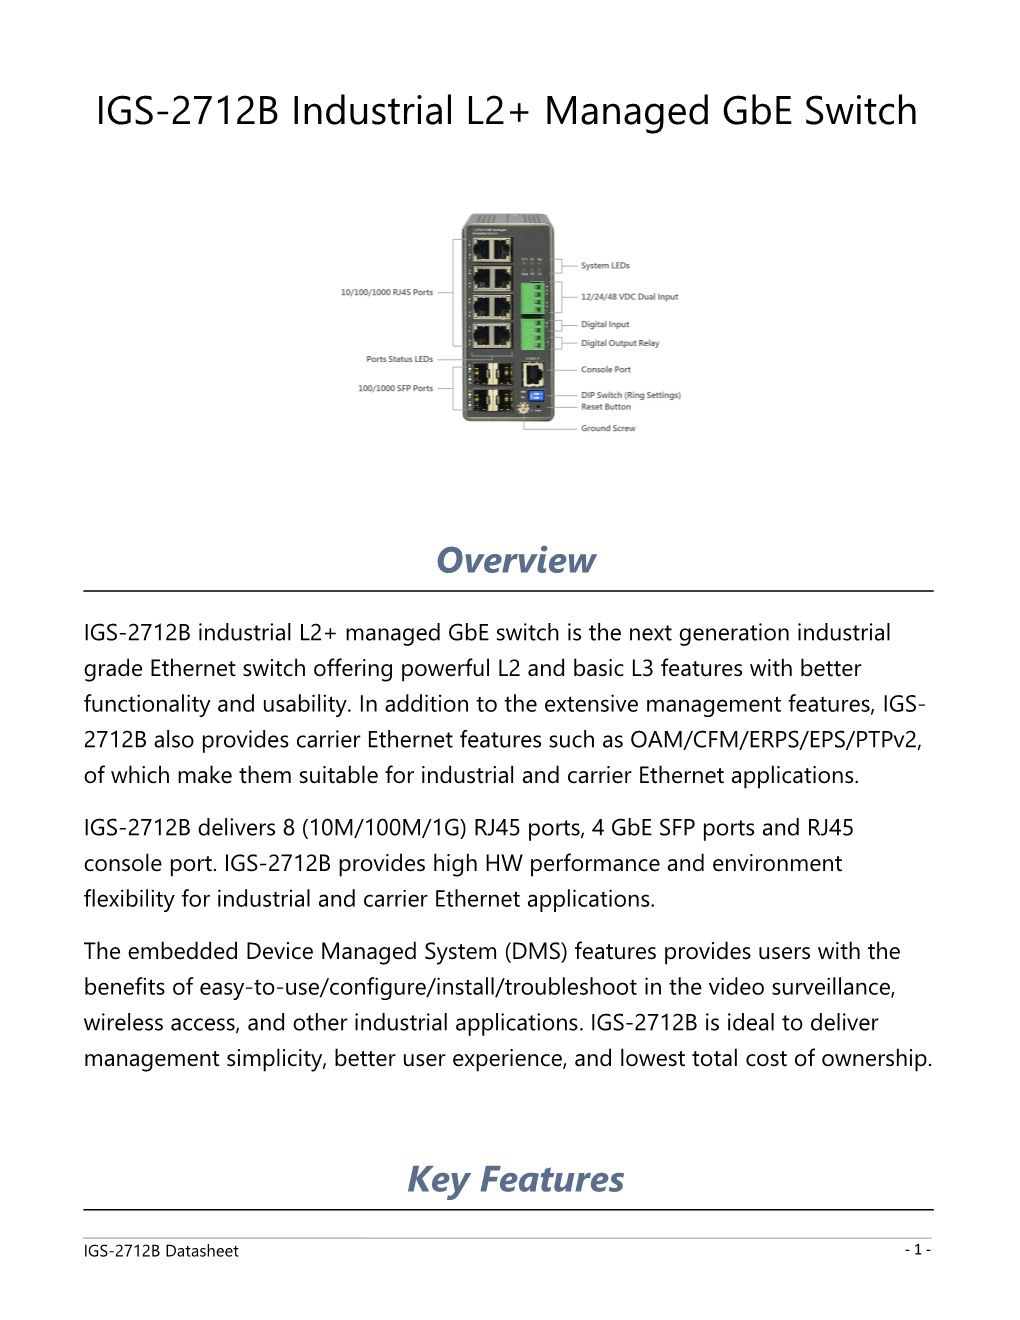 IGS-2712Bindustrial L2+ Managed Gbe Switch